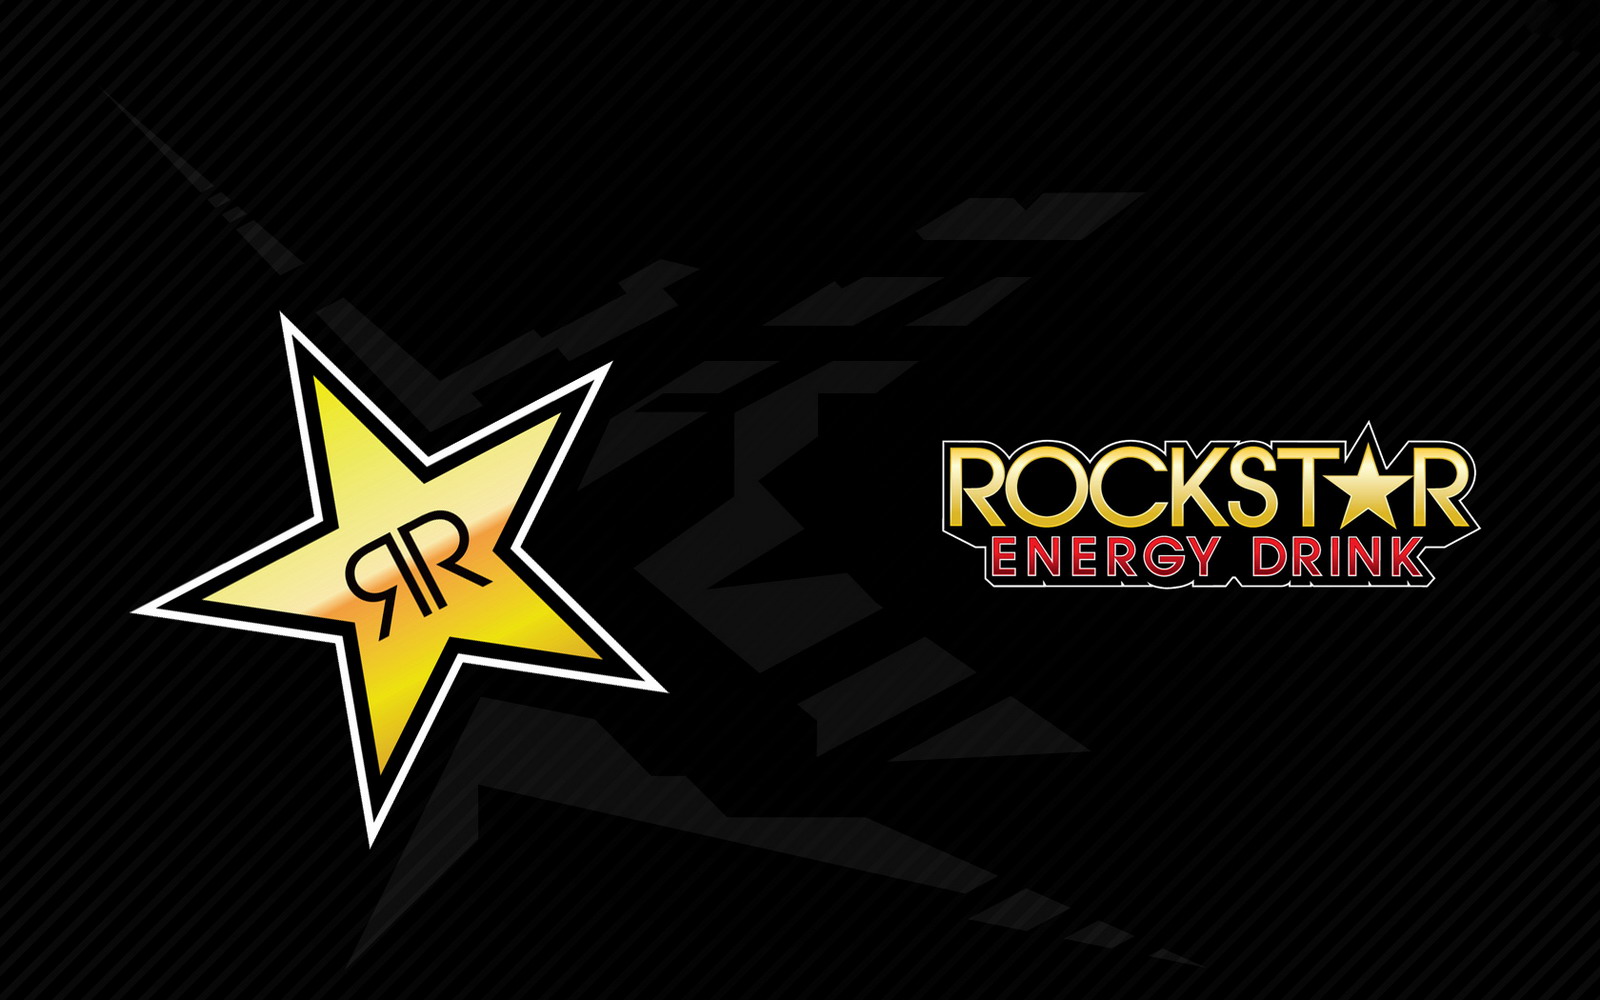 Rockstar Energy Drink Logo Wallpaper Image Amp Pictures Becuo